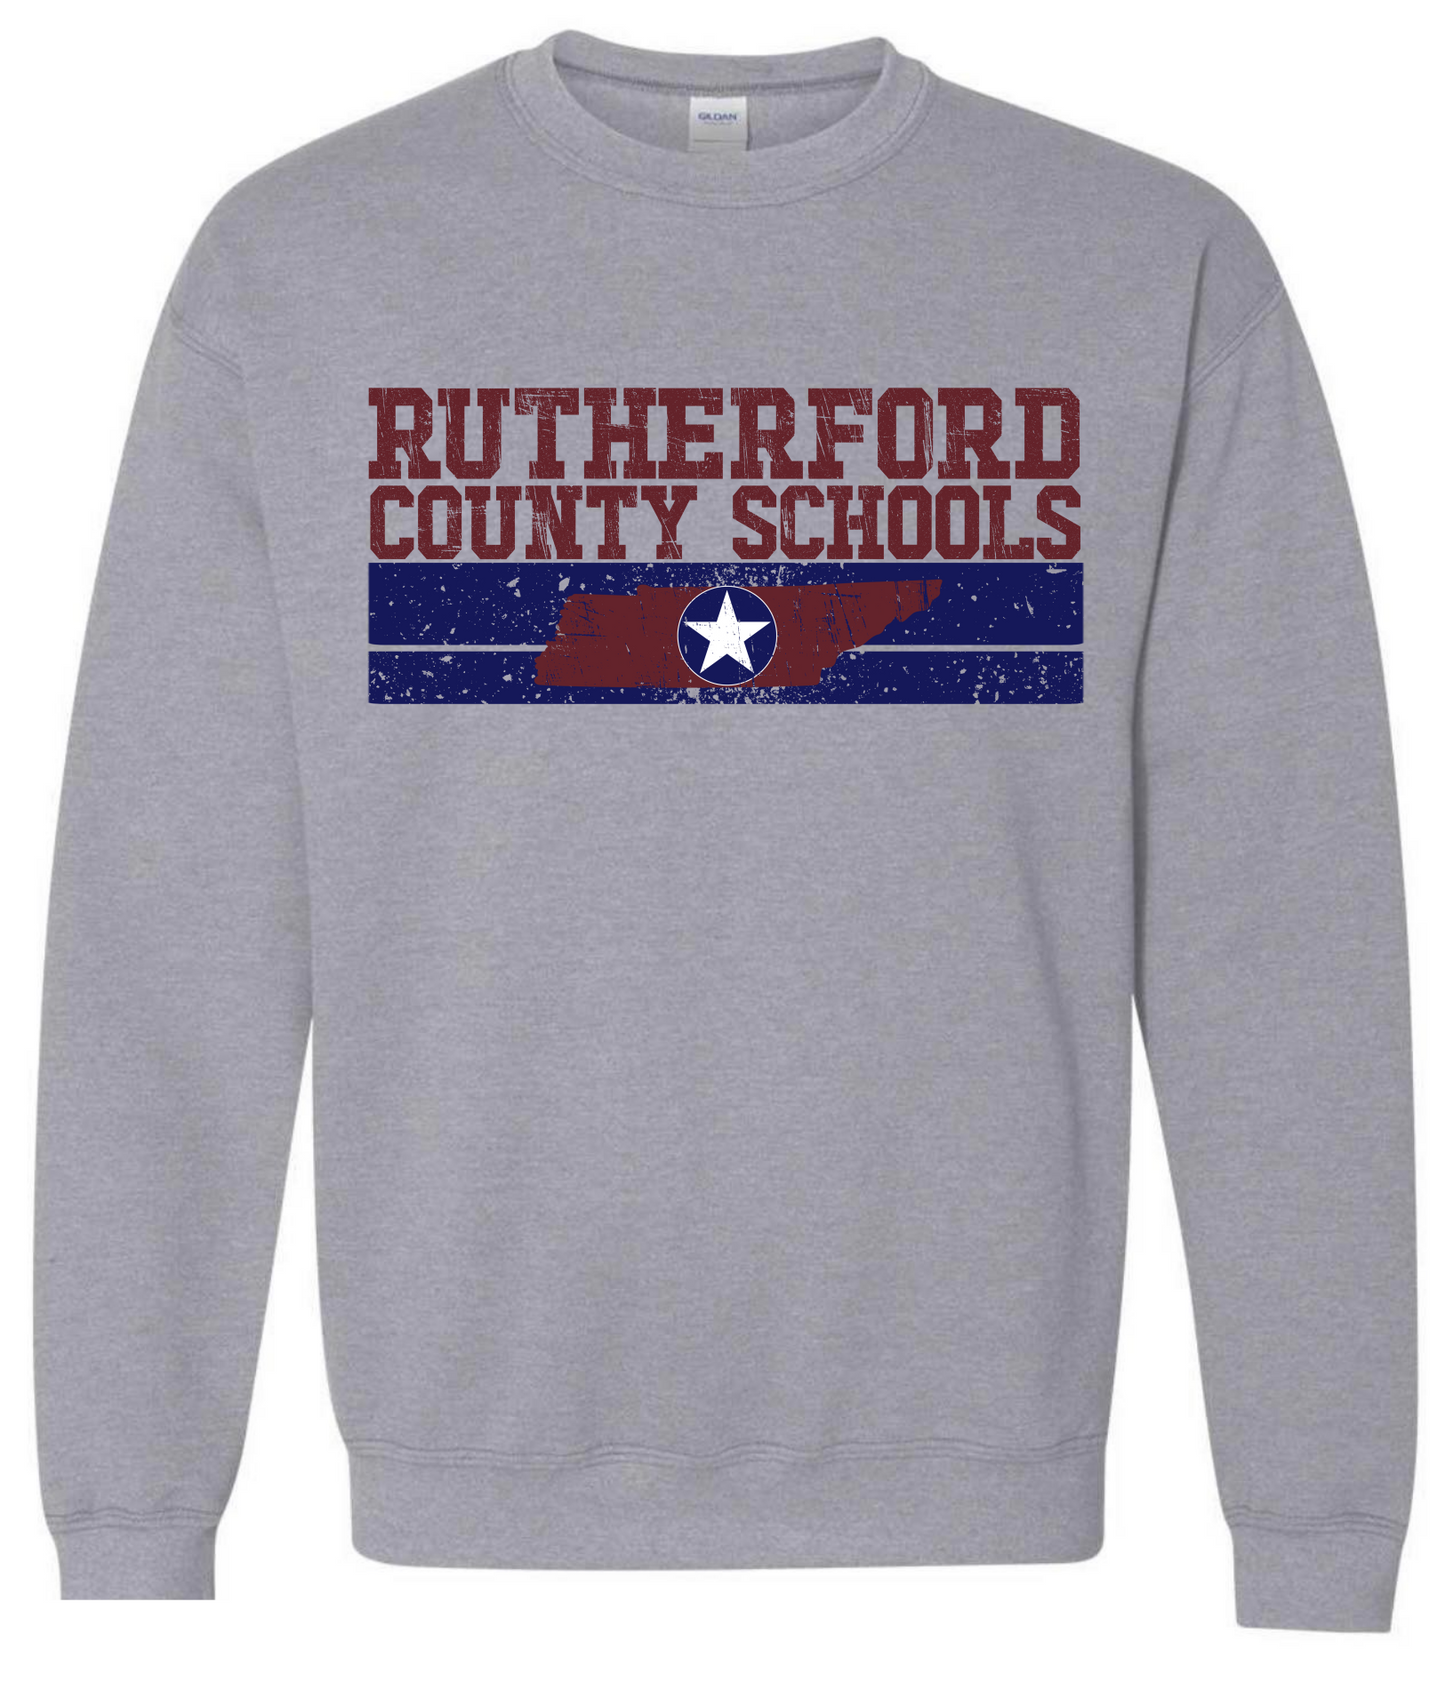 Rutherford County Schools Distressed Sweatshirt